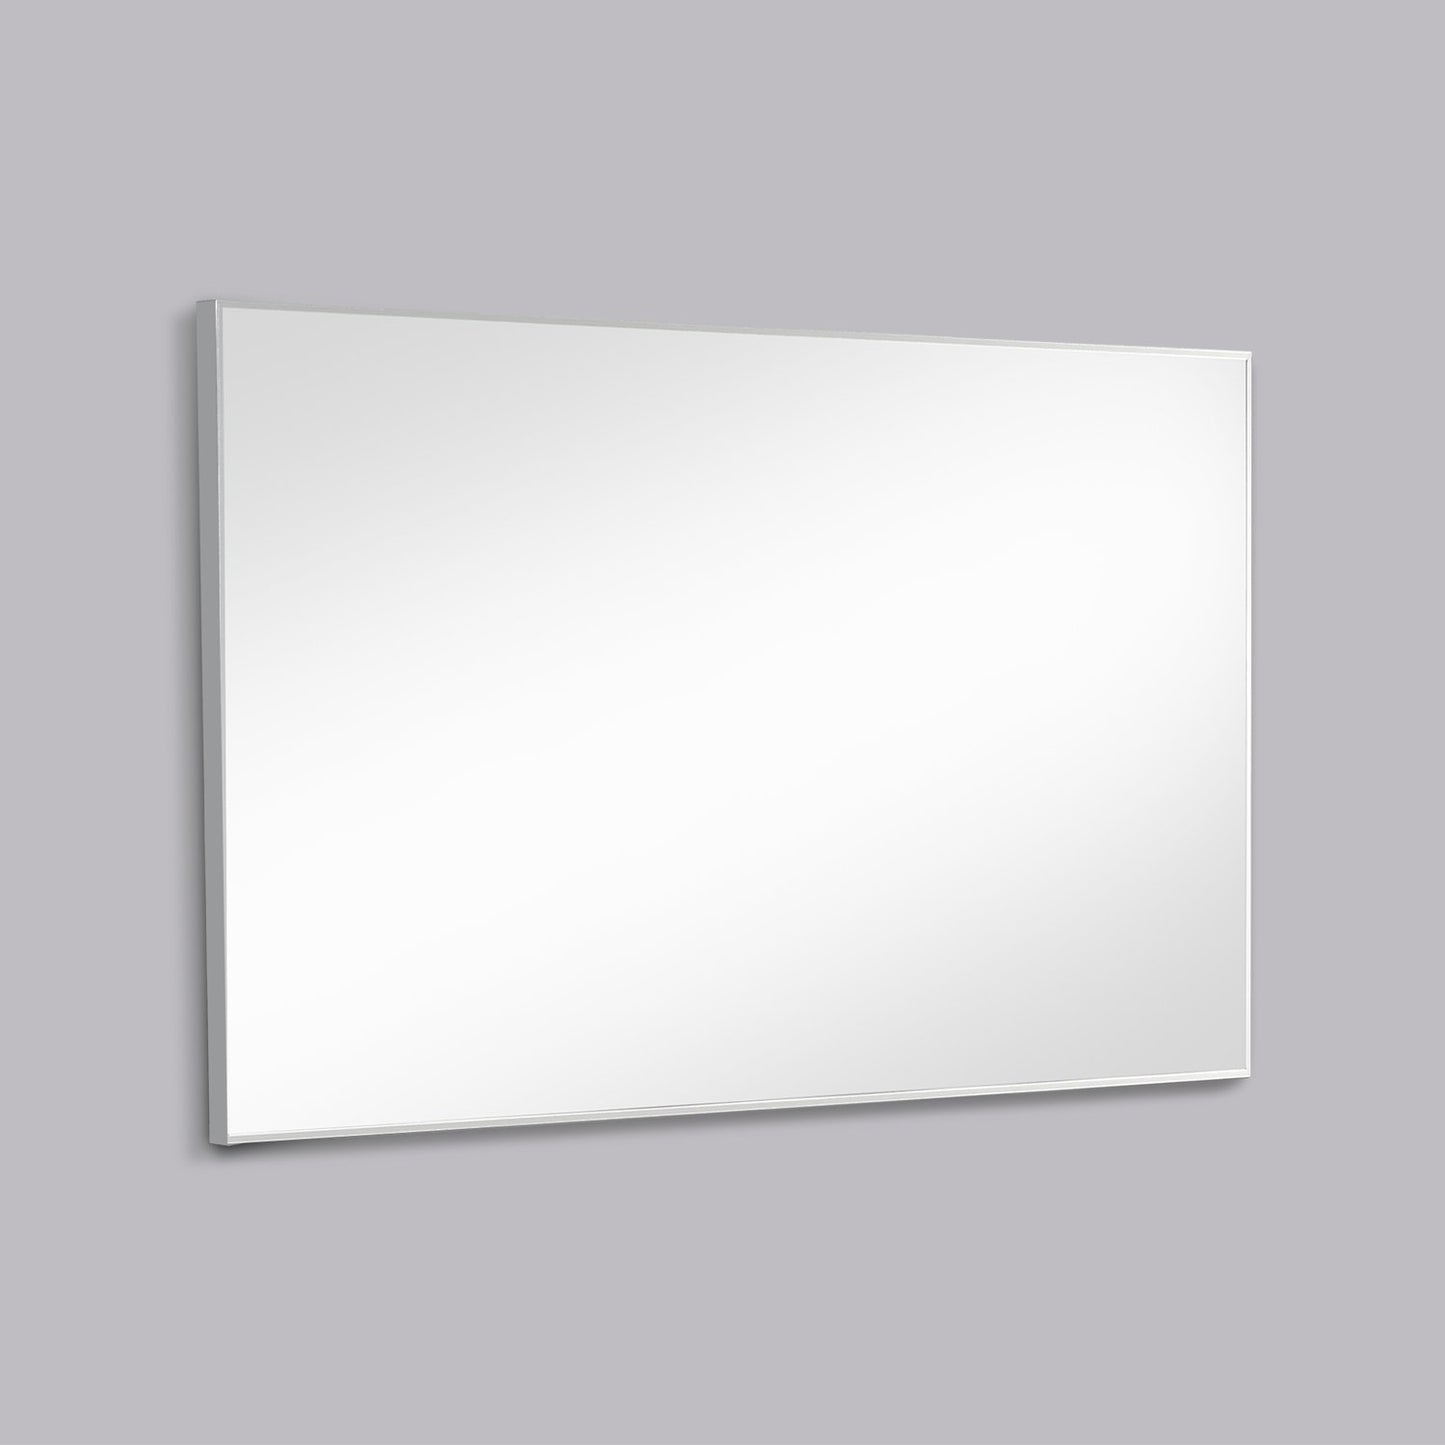 Eviva Sax 72 in. Polished Chrome Framed Bathroom Wall Mirror - Luxe Bathroom Vanities Luxury Bathroom Fixtures Bathroom Furniture